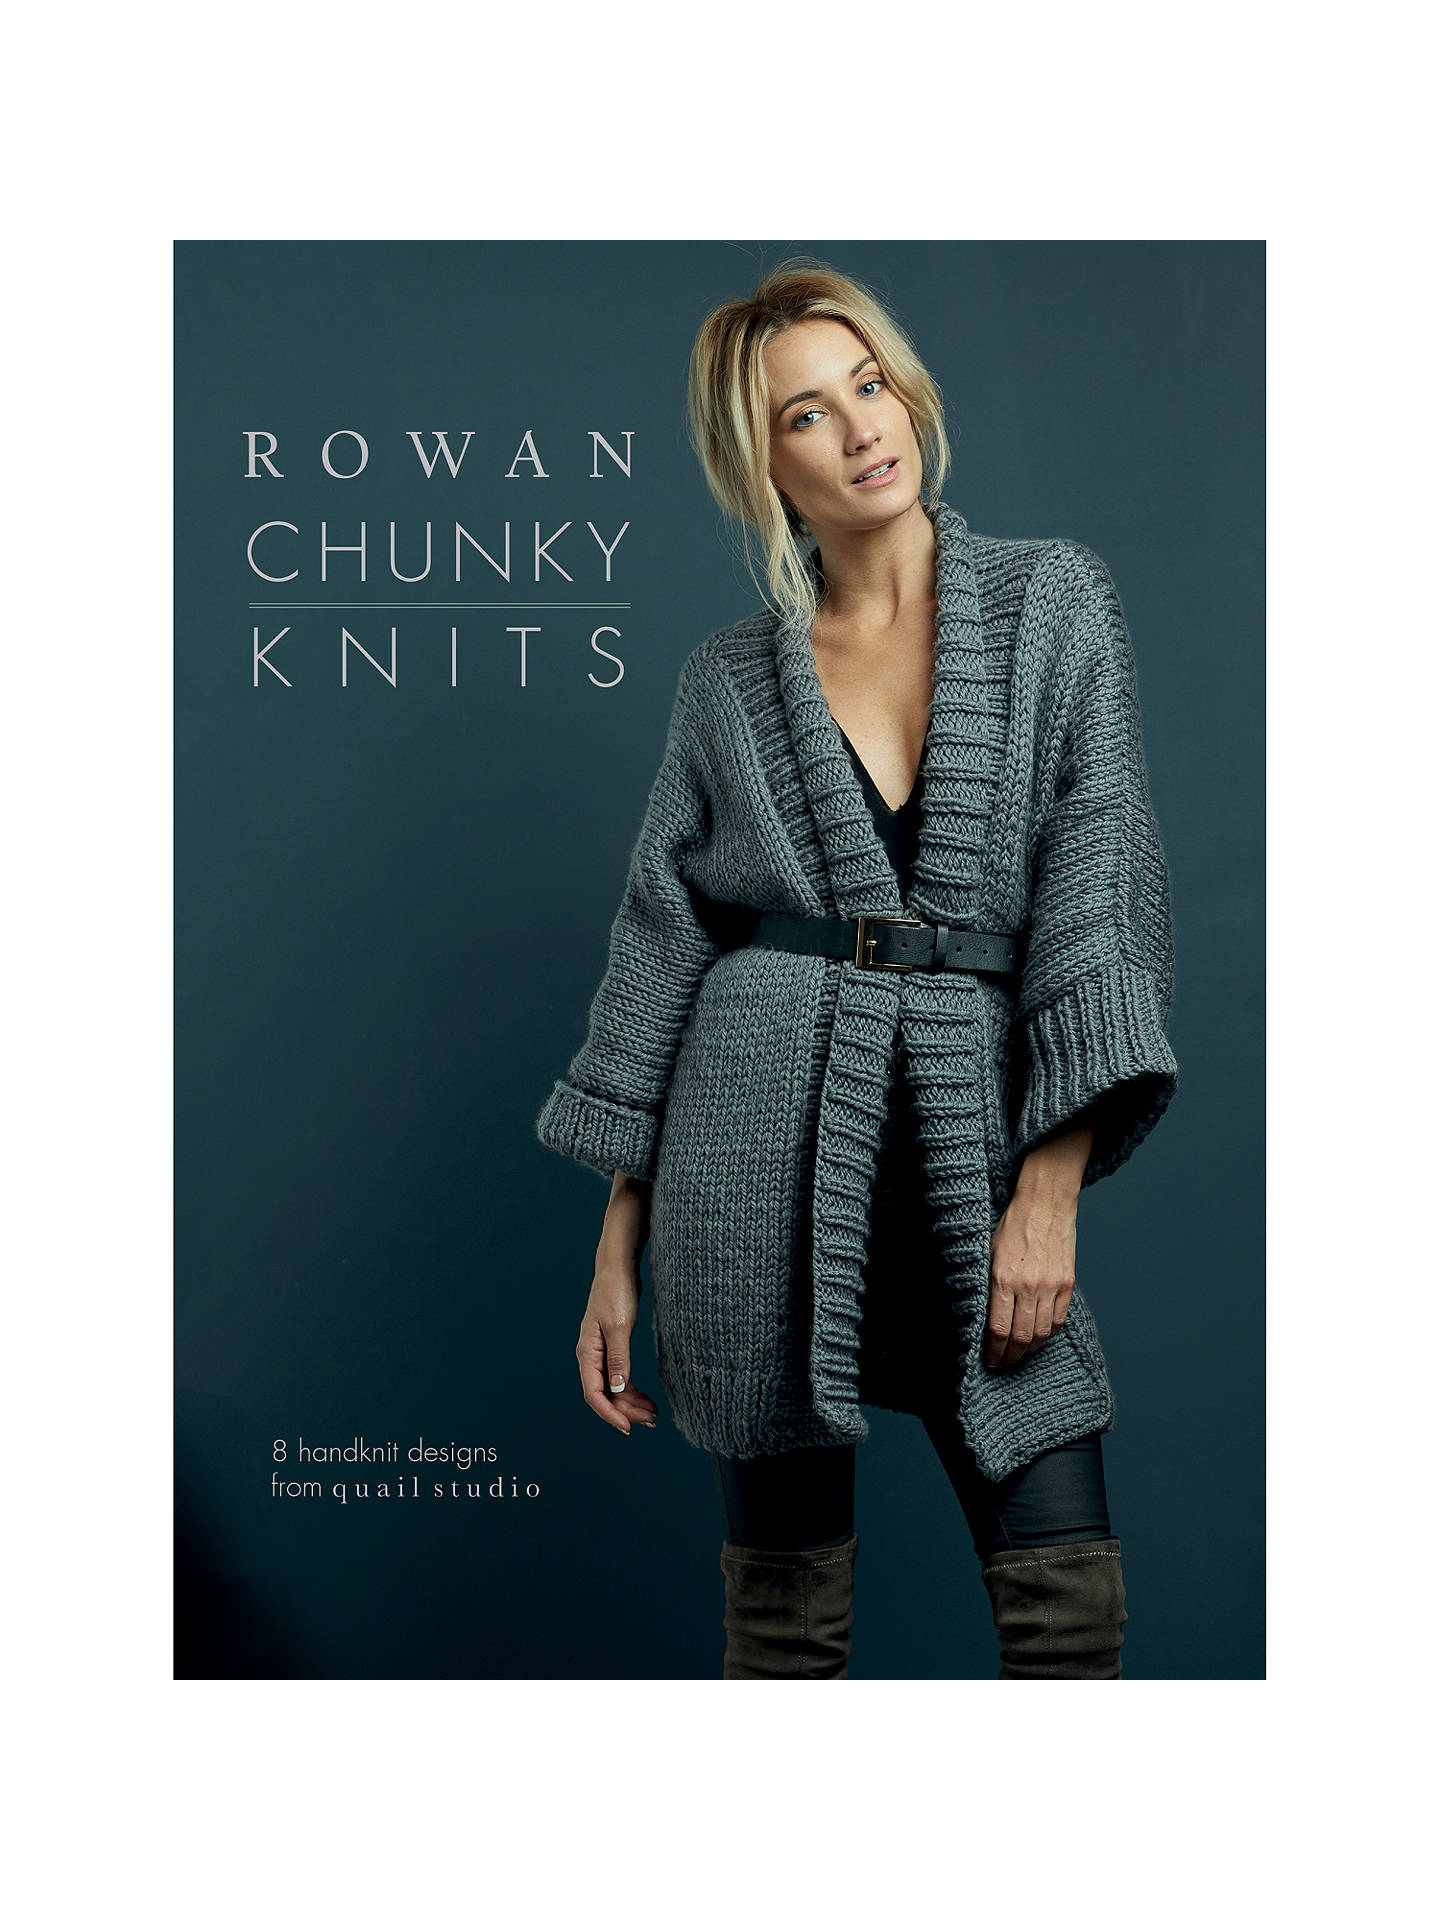 Chunky knit patterns free online